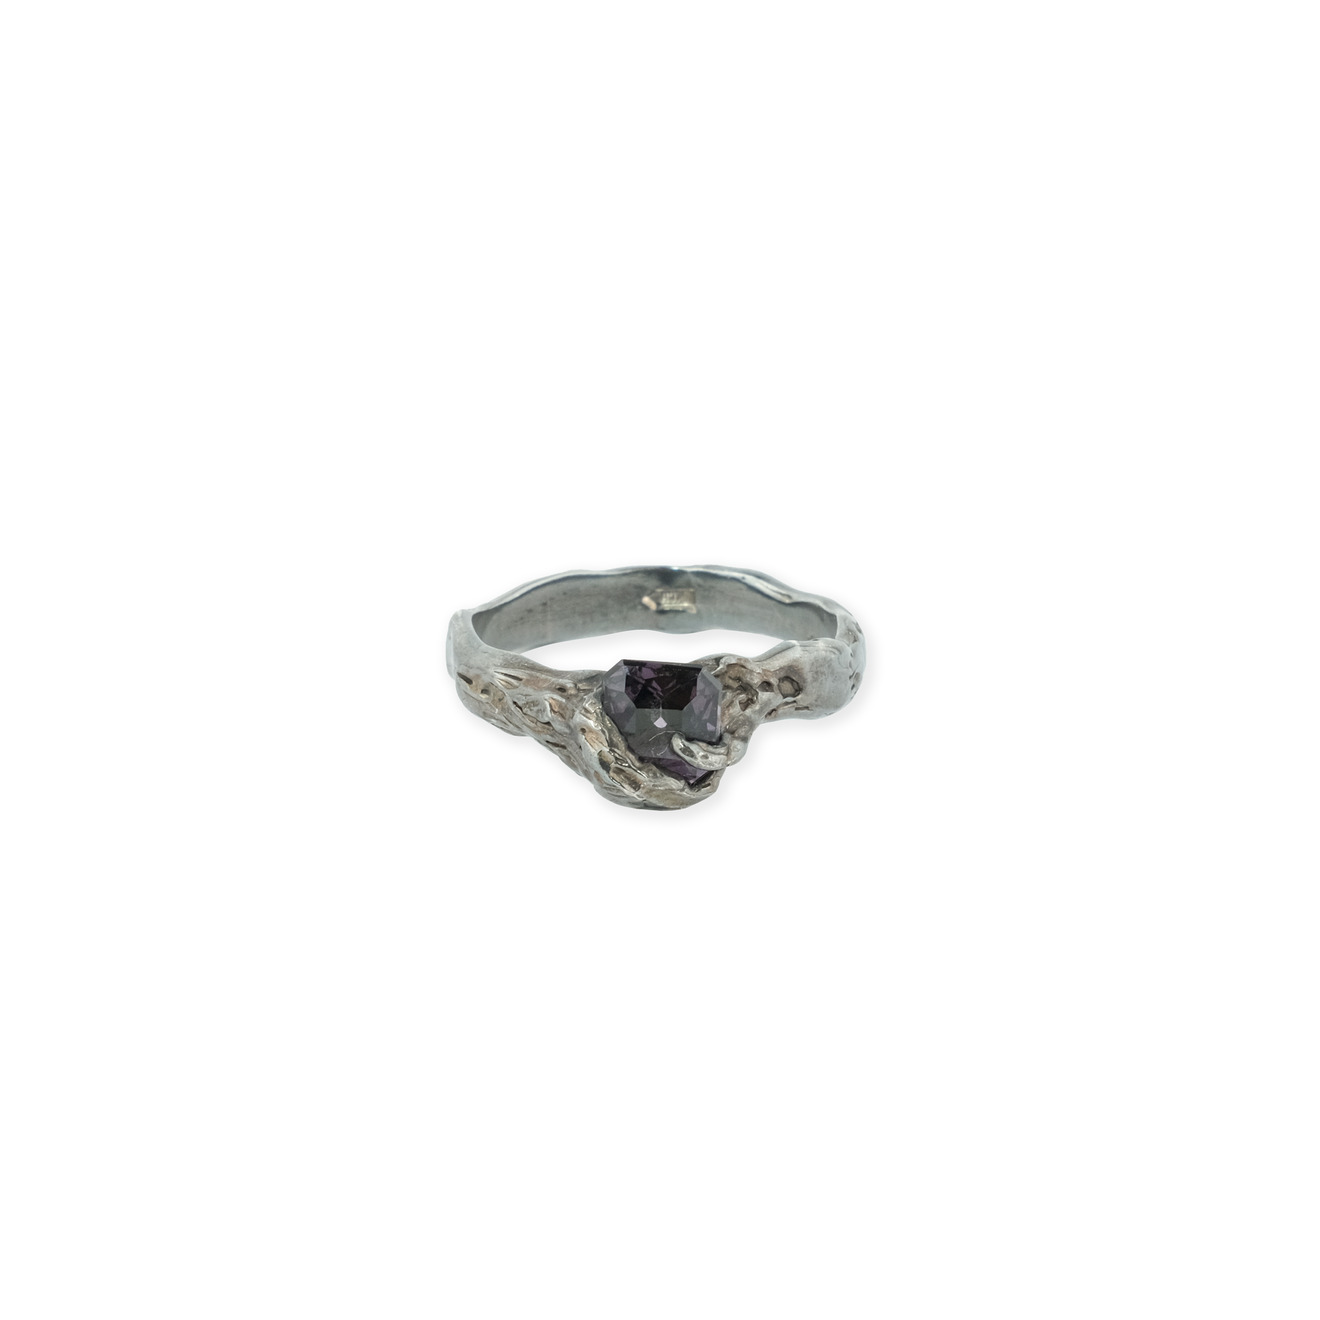 Kintsugi Jewelry Кольцо из серебра со вставкой из шпинели poche кольцо из серебра с синей вставкой